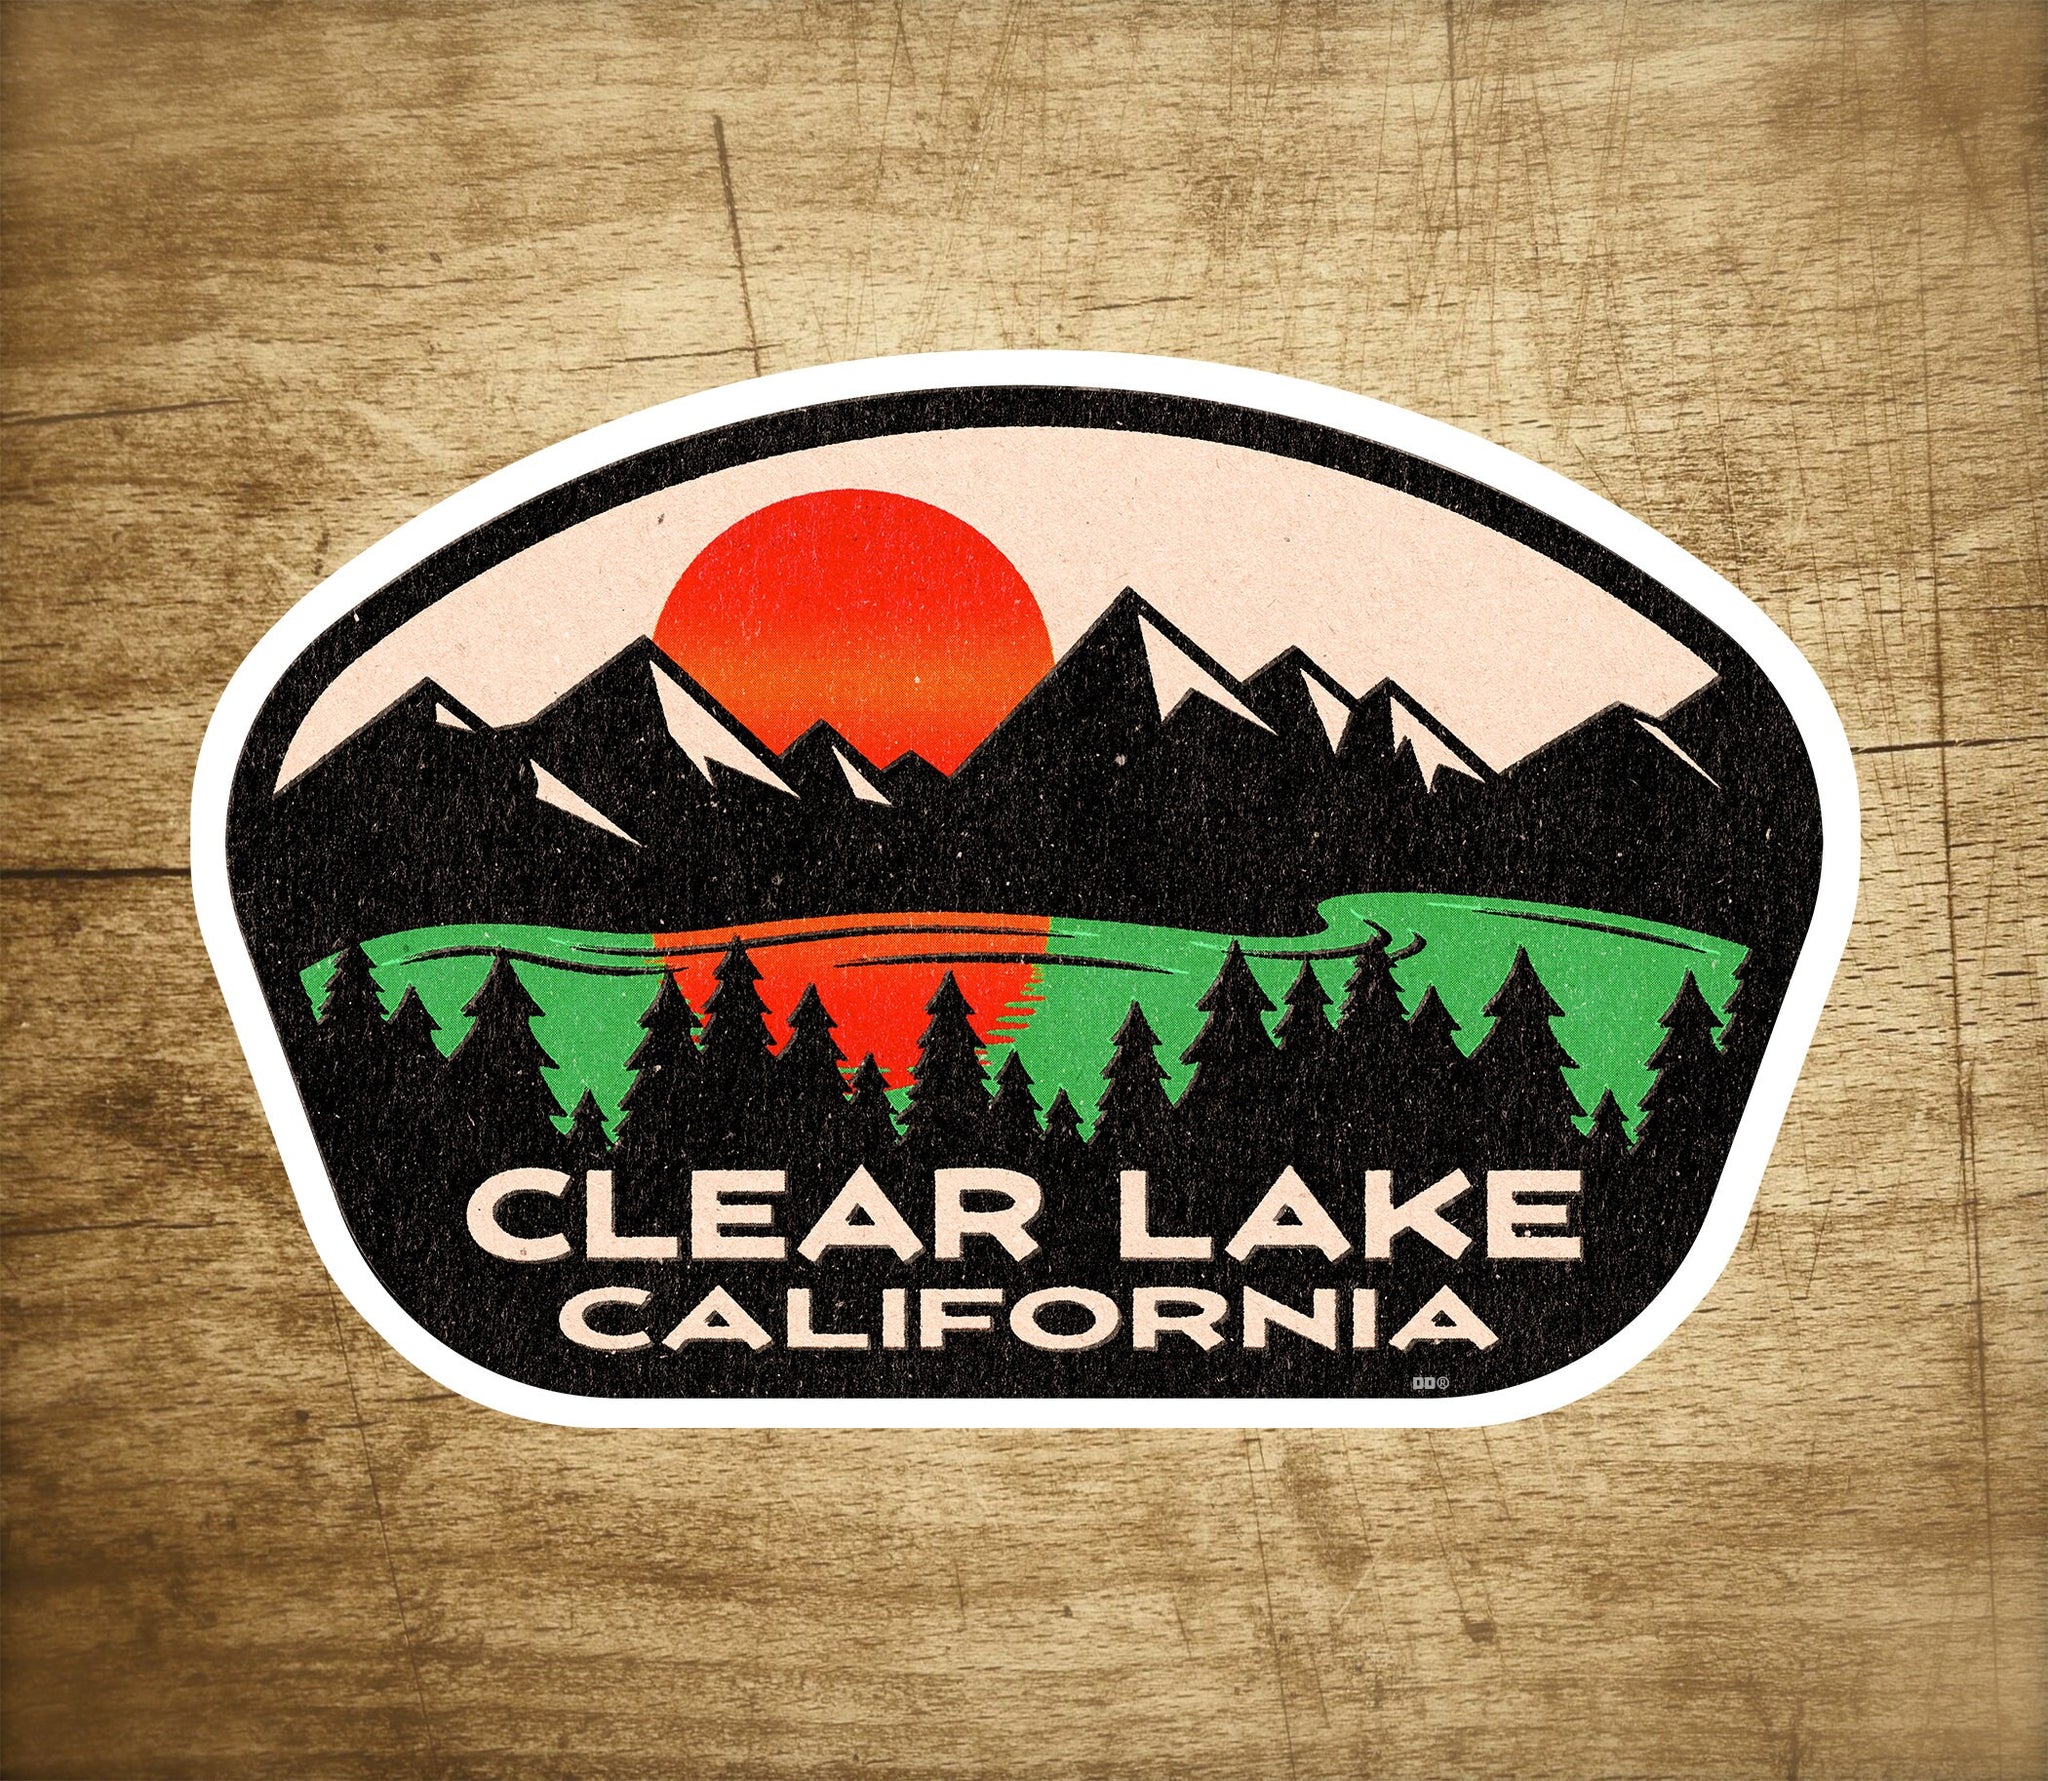 Clear Lake California Decal 3.75" x 2.5" Sticker Bass Fishing